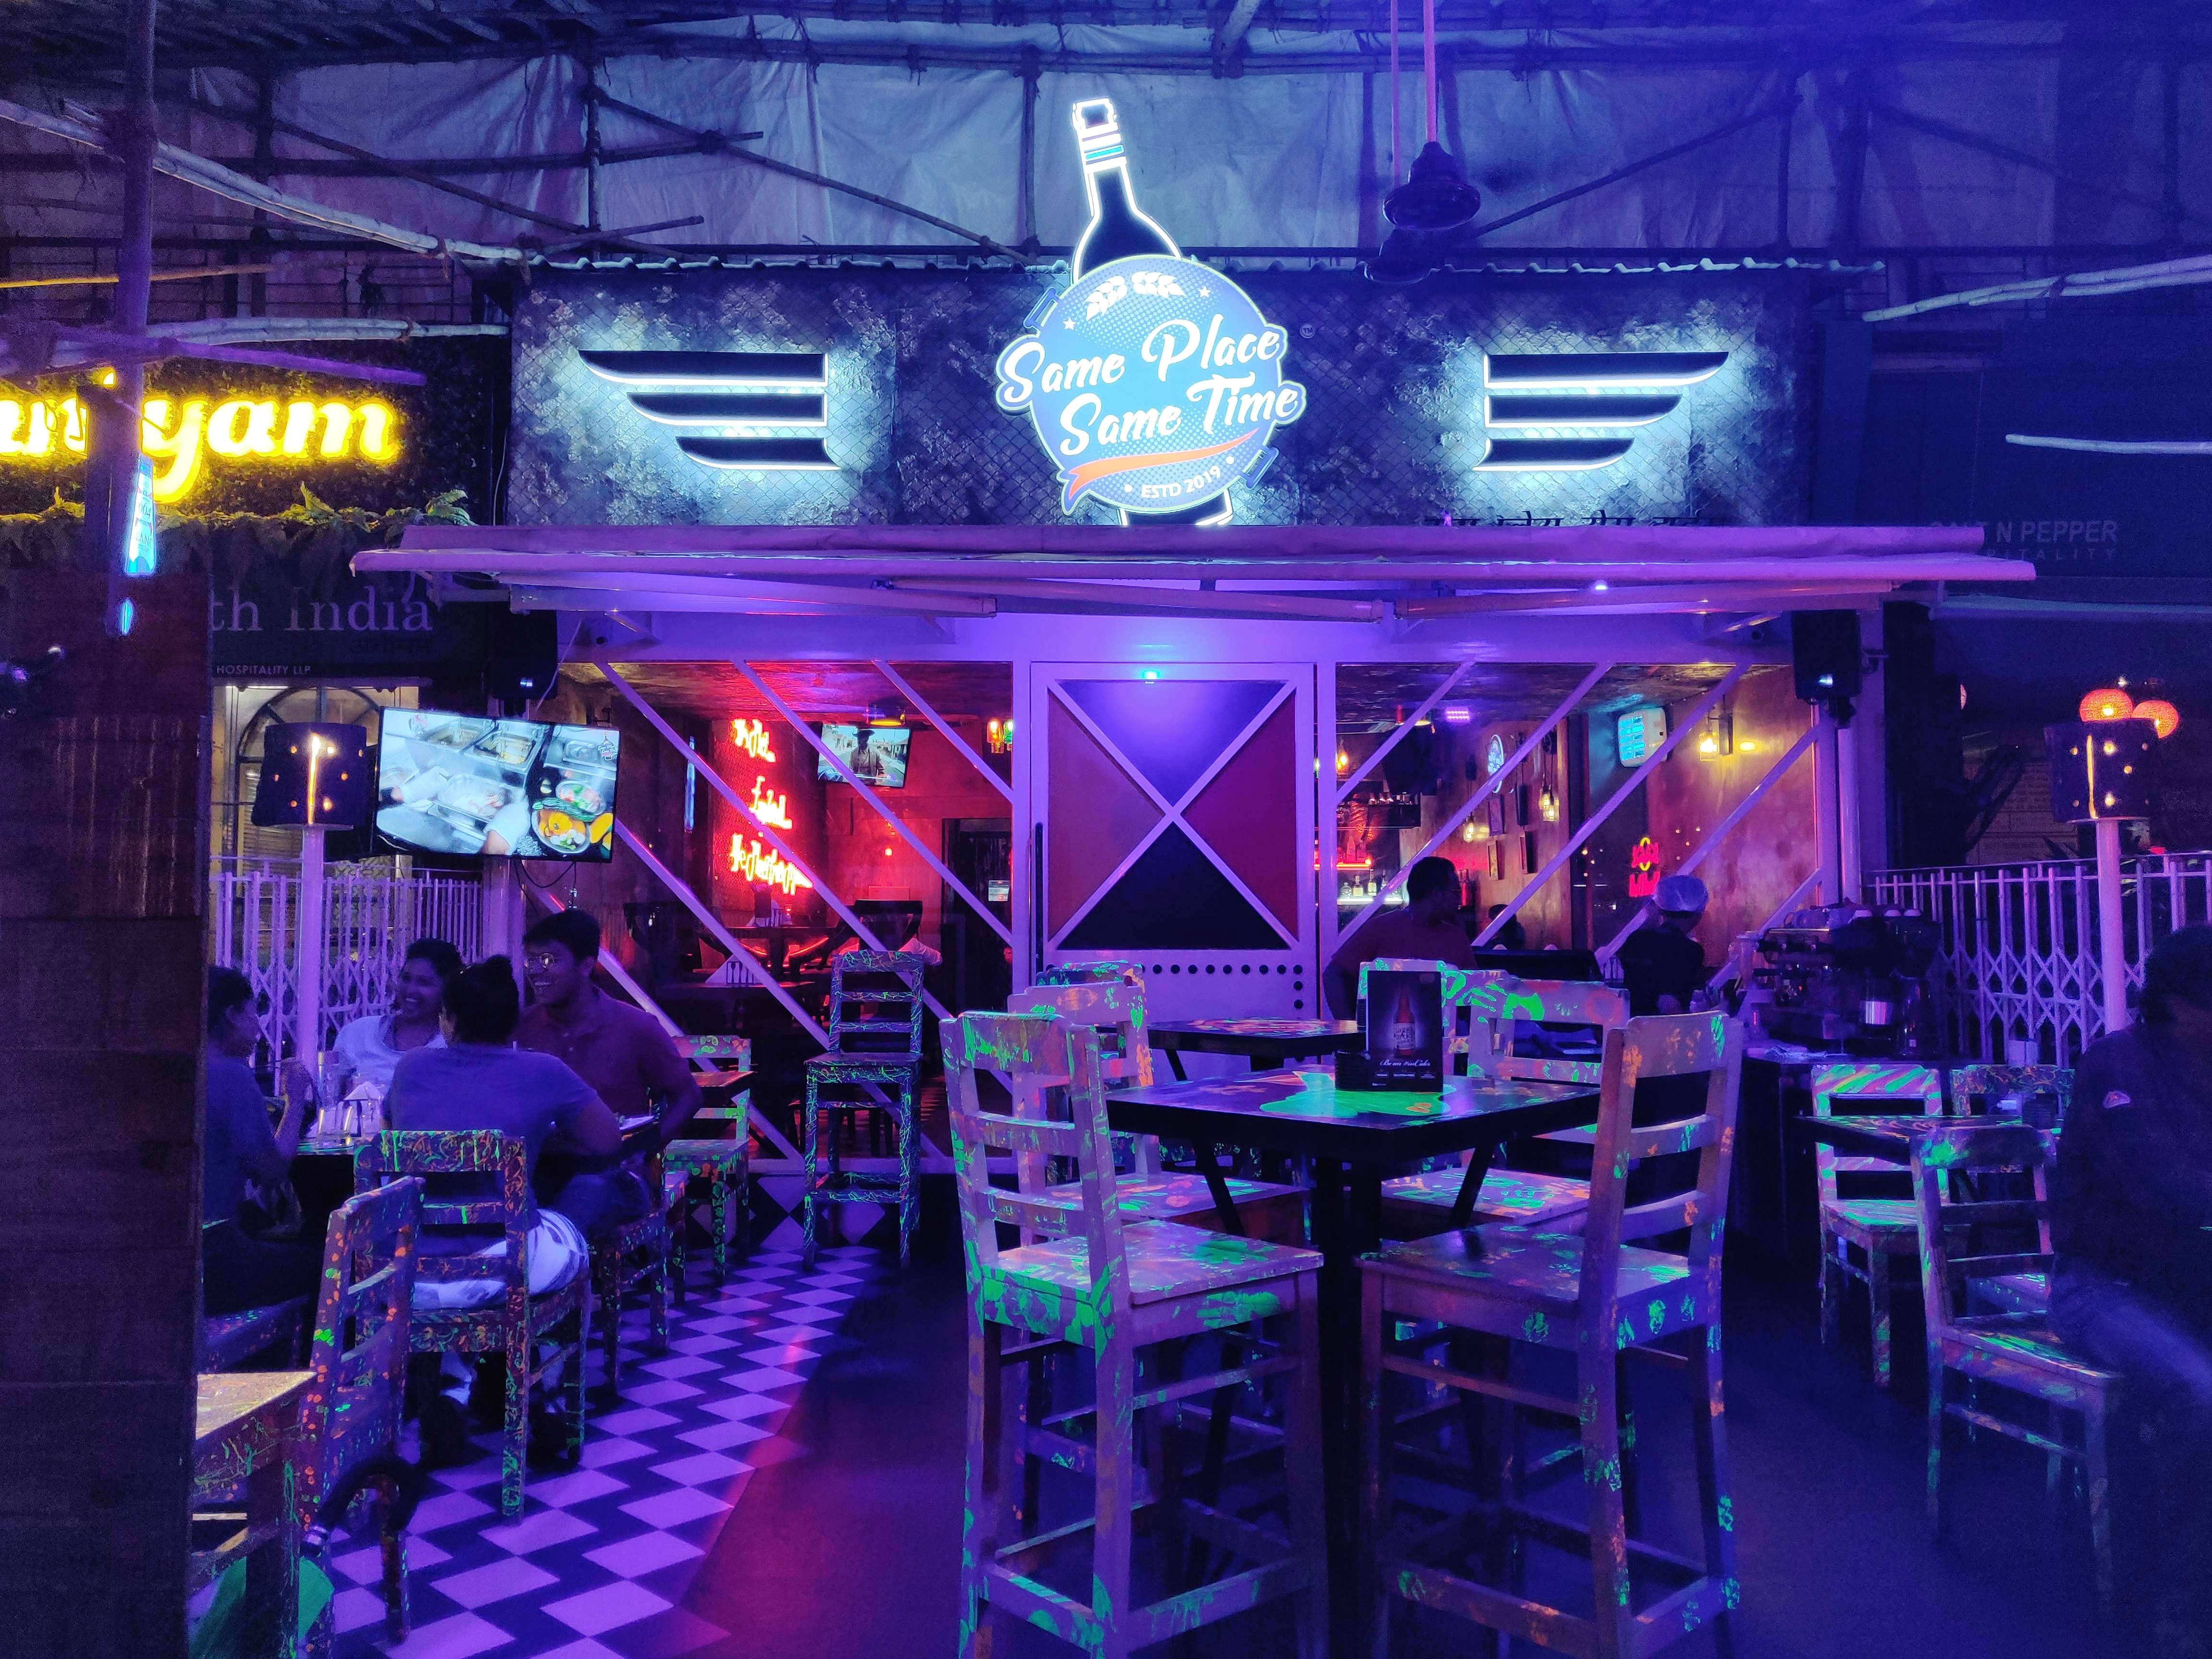 Nightclub,Lighting,Disco,Music venue,Purple,Pub,Bar,Table,Night,Visual effect lighting